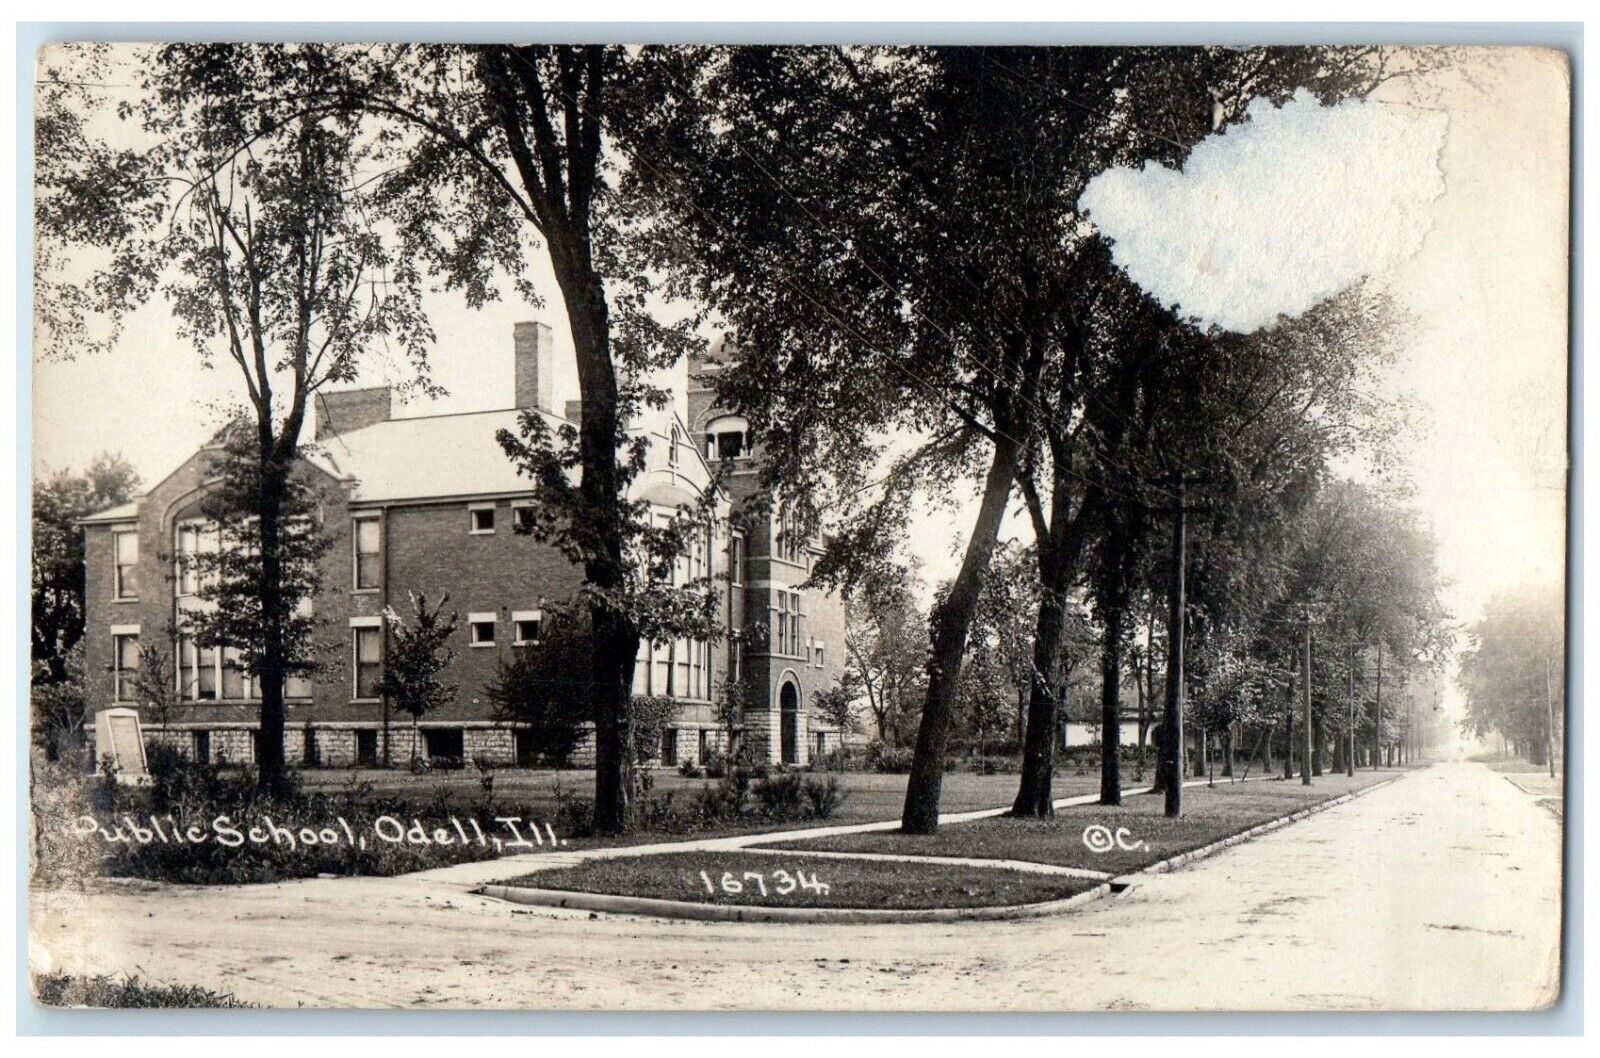 1918 Public School Building Odell Illinois IL RPPC Photo Posted Antique Postcard